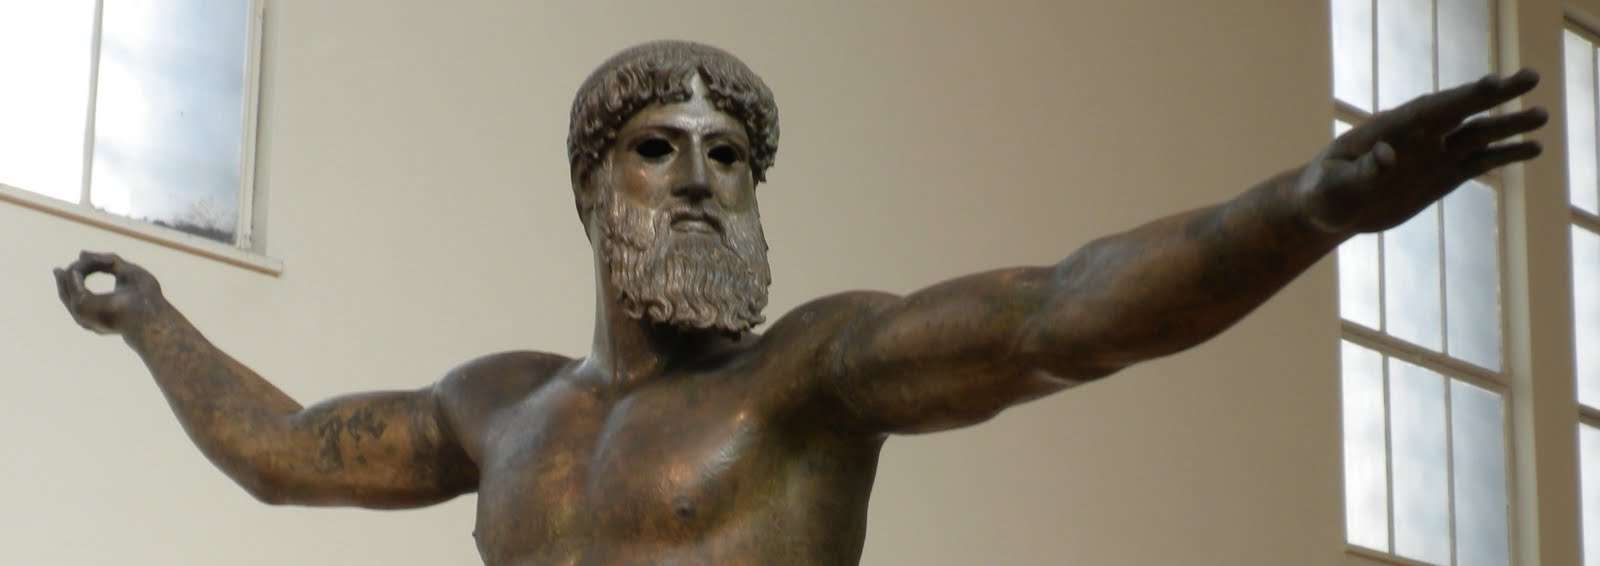 Phaethon - Statue of Zeus or Poseidon - Άγαλμα Διός ή Ποσειδώνος